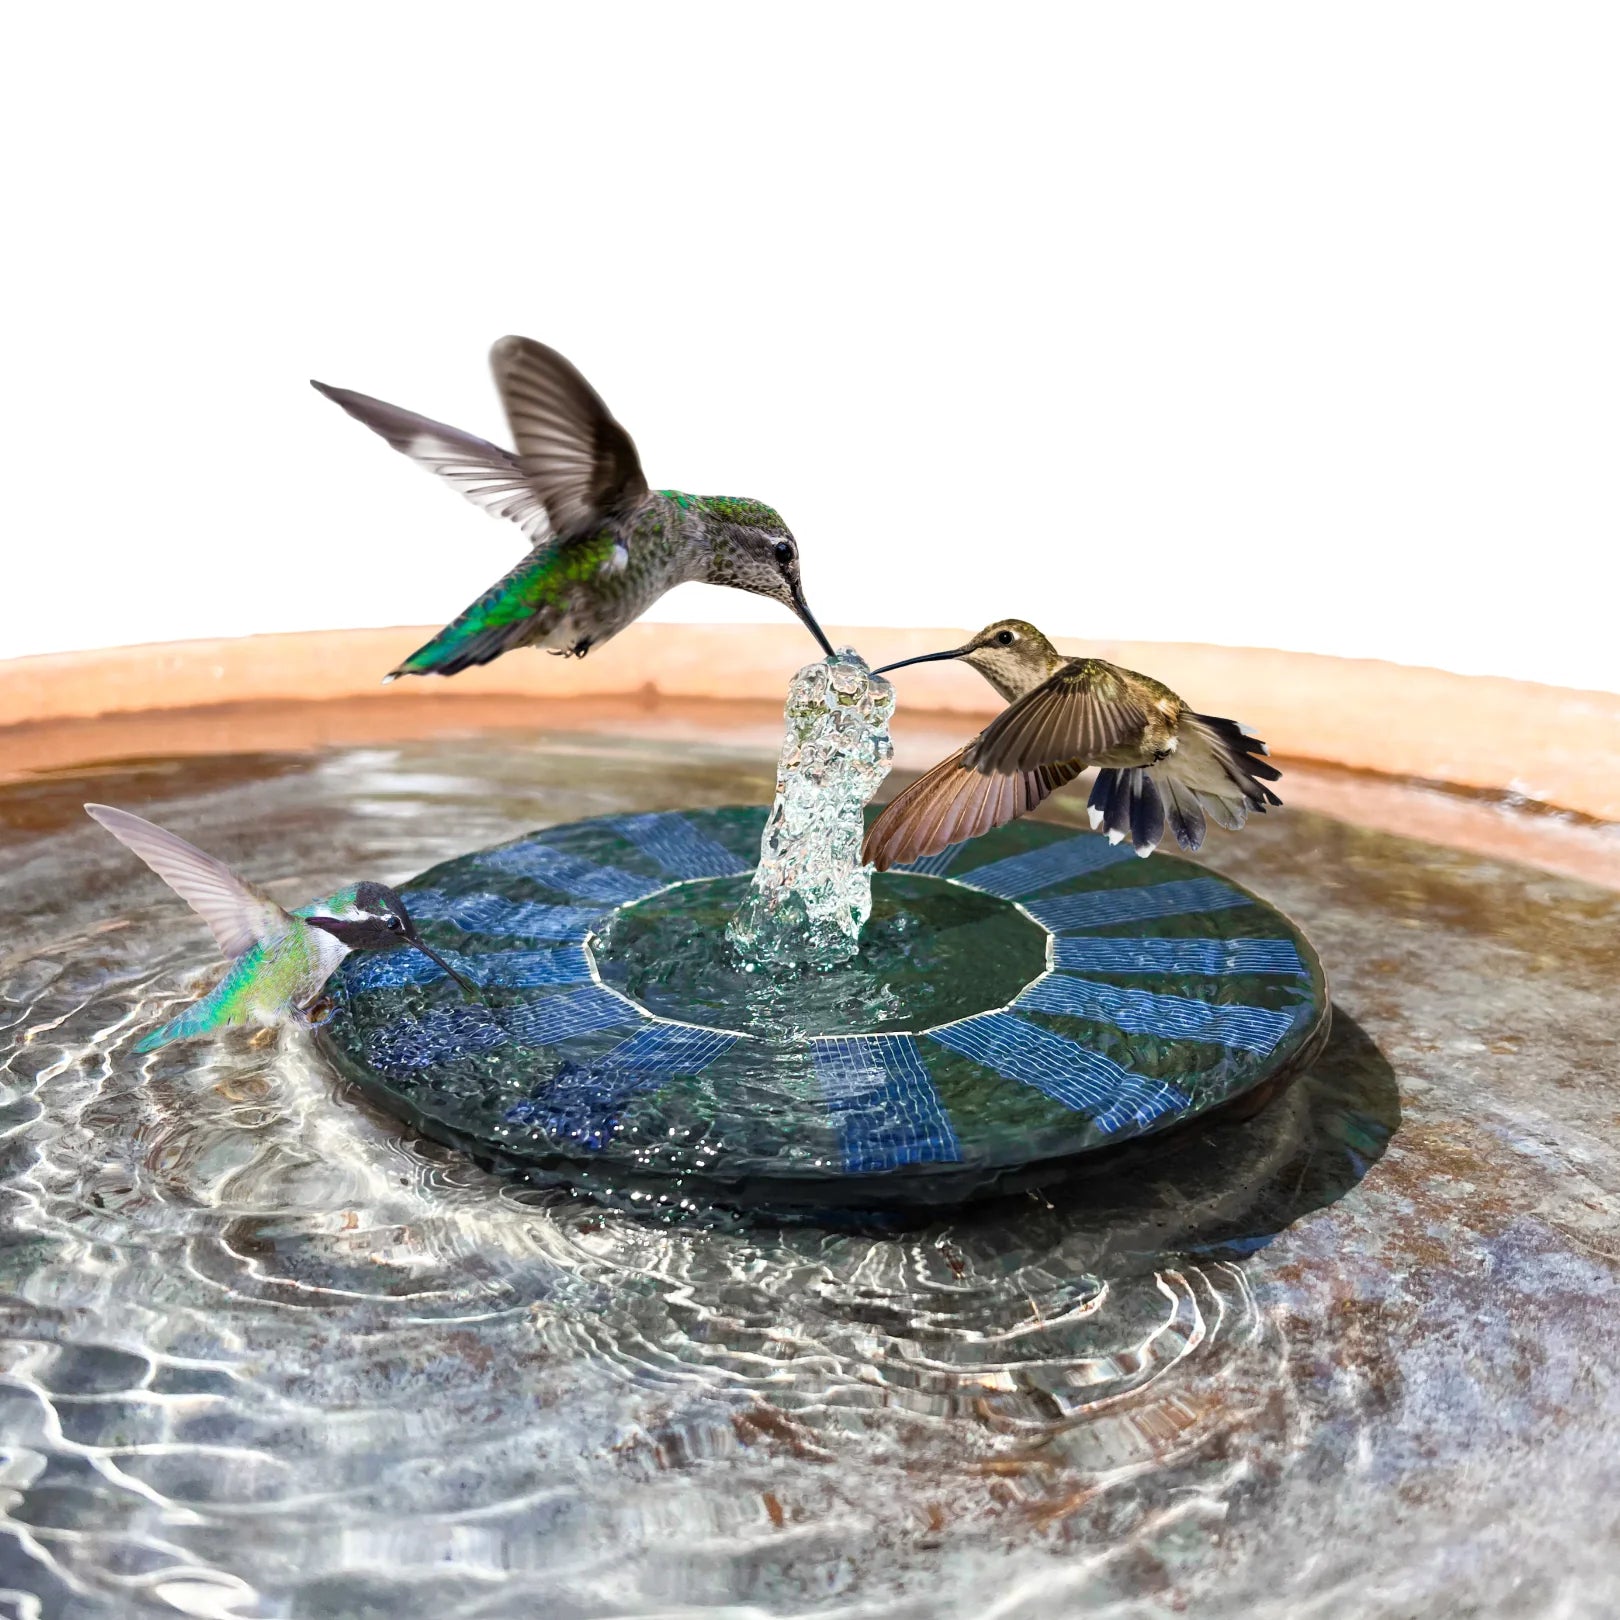 Replacement Solar Pump for Bird Bath